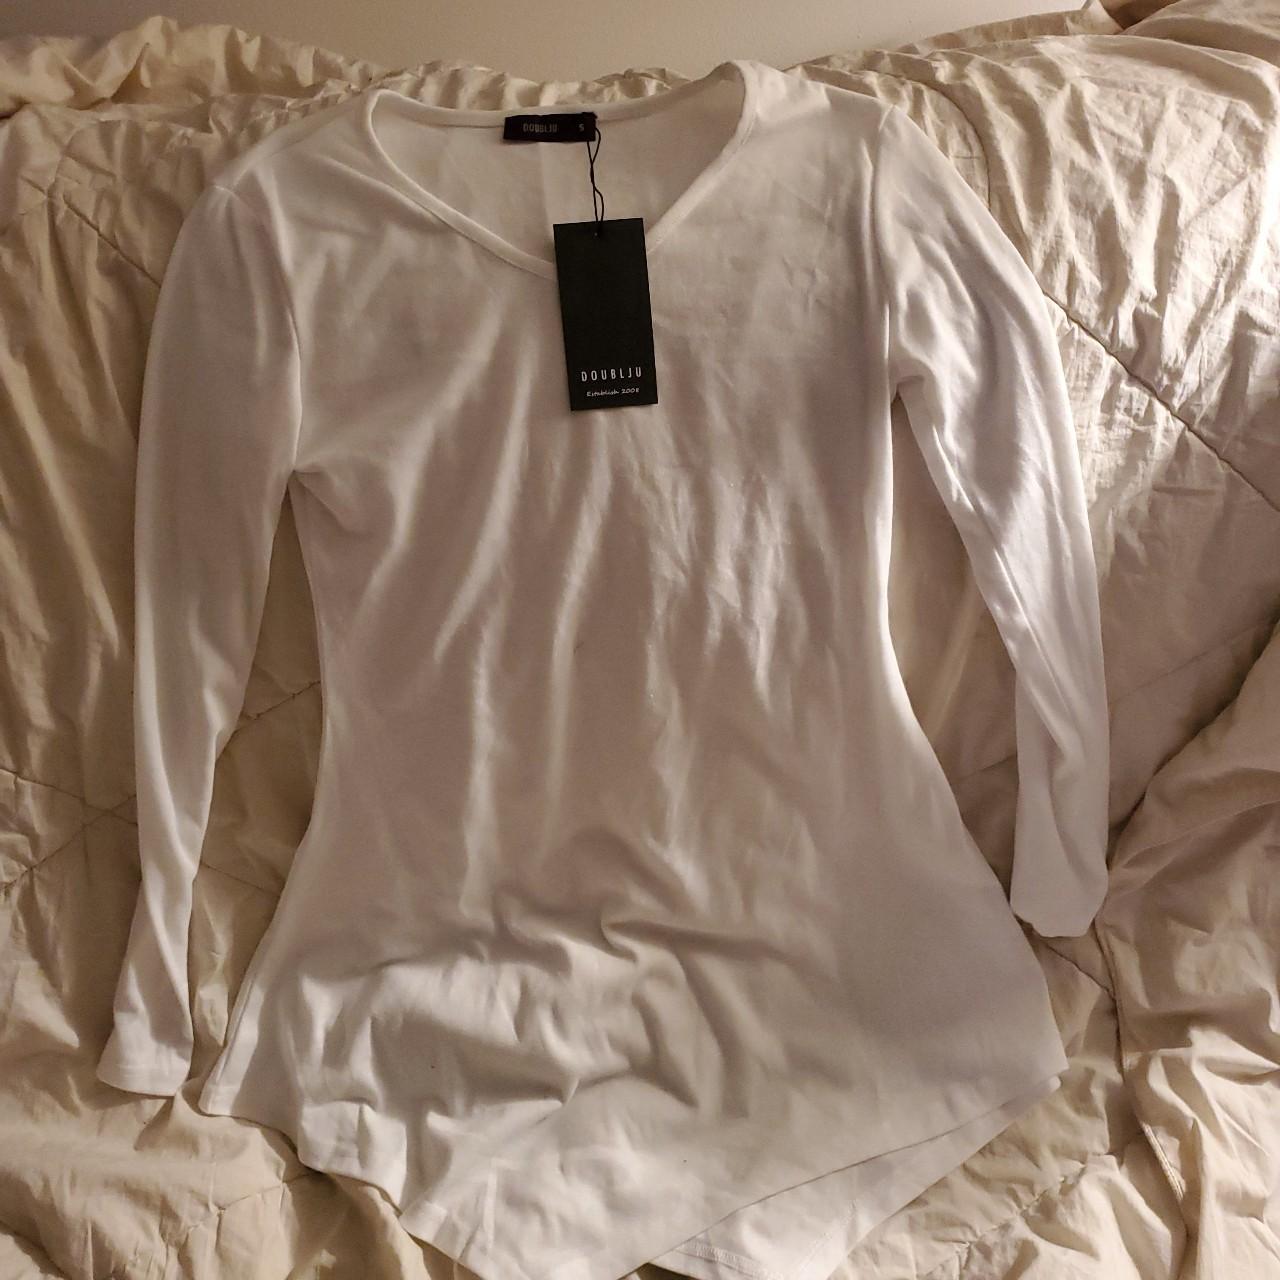 Isabel Marant Women's White T-shirt